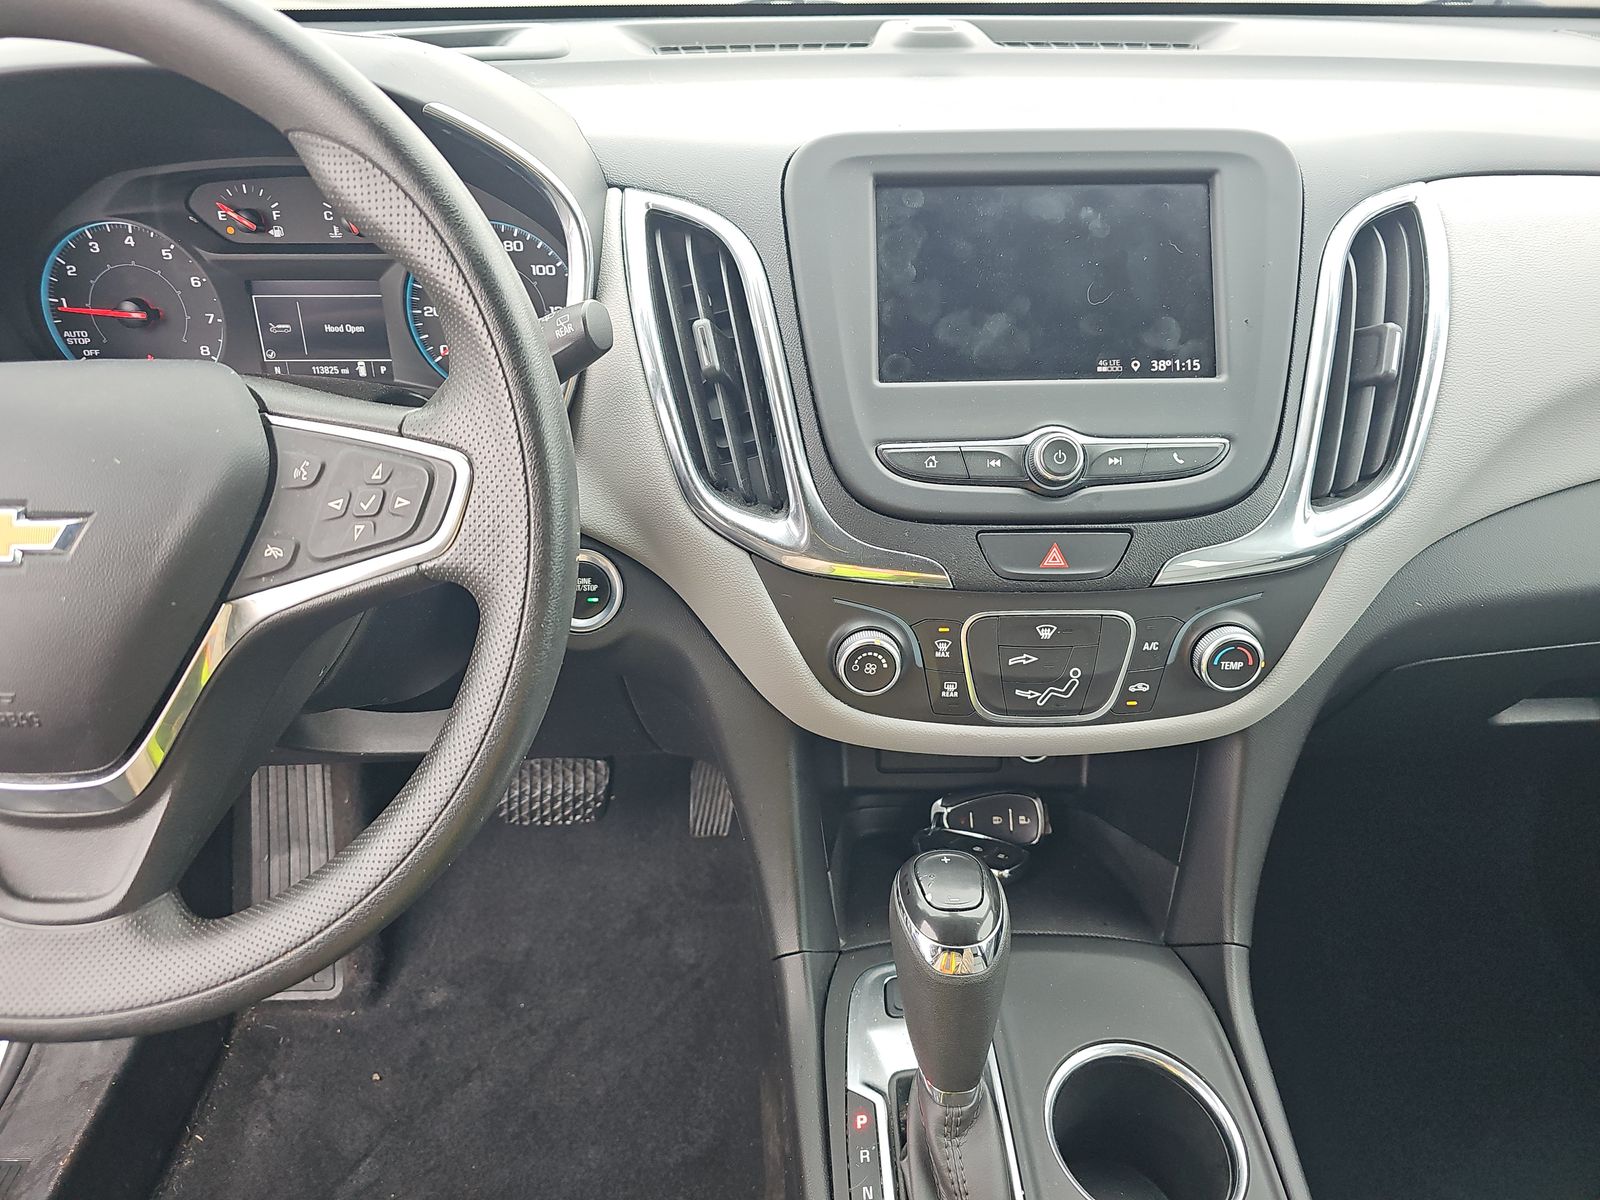 2020 Chevrolet Equinox LS AWD